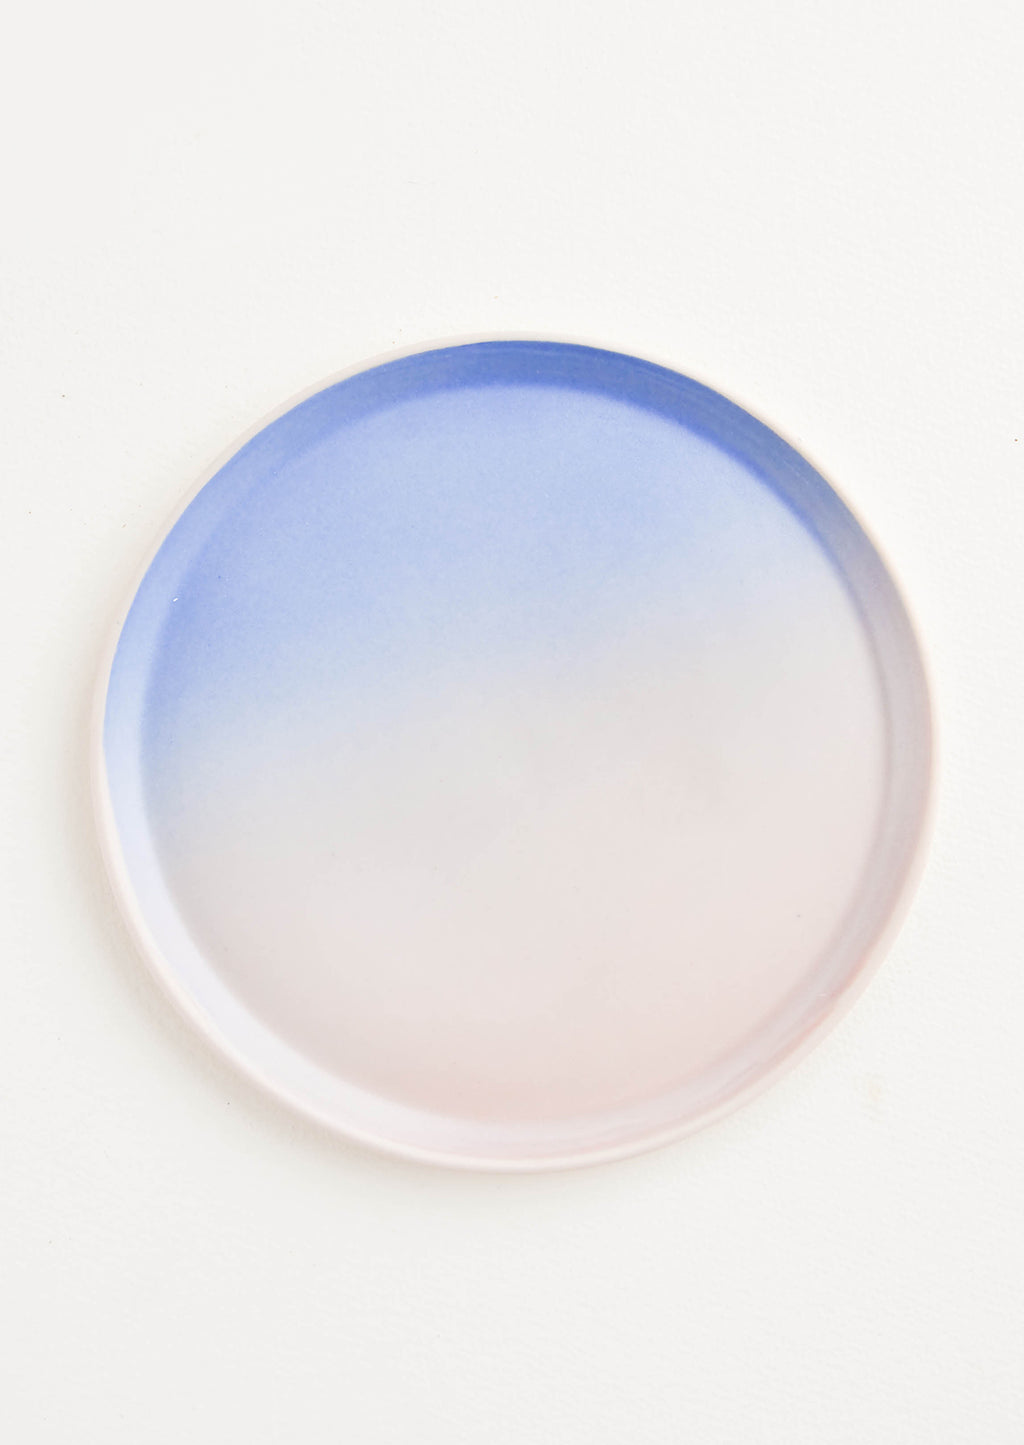 Dusk: A rimmed porcelain blue and pink ombre plate.